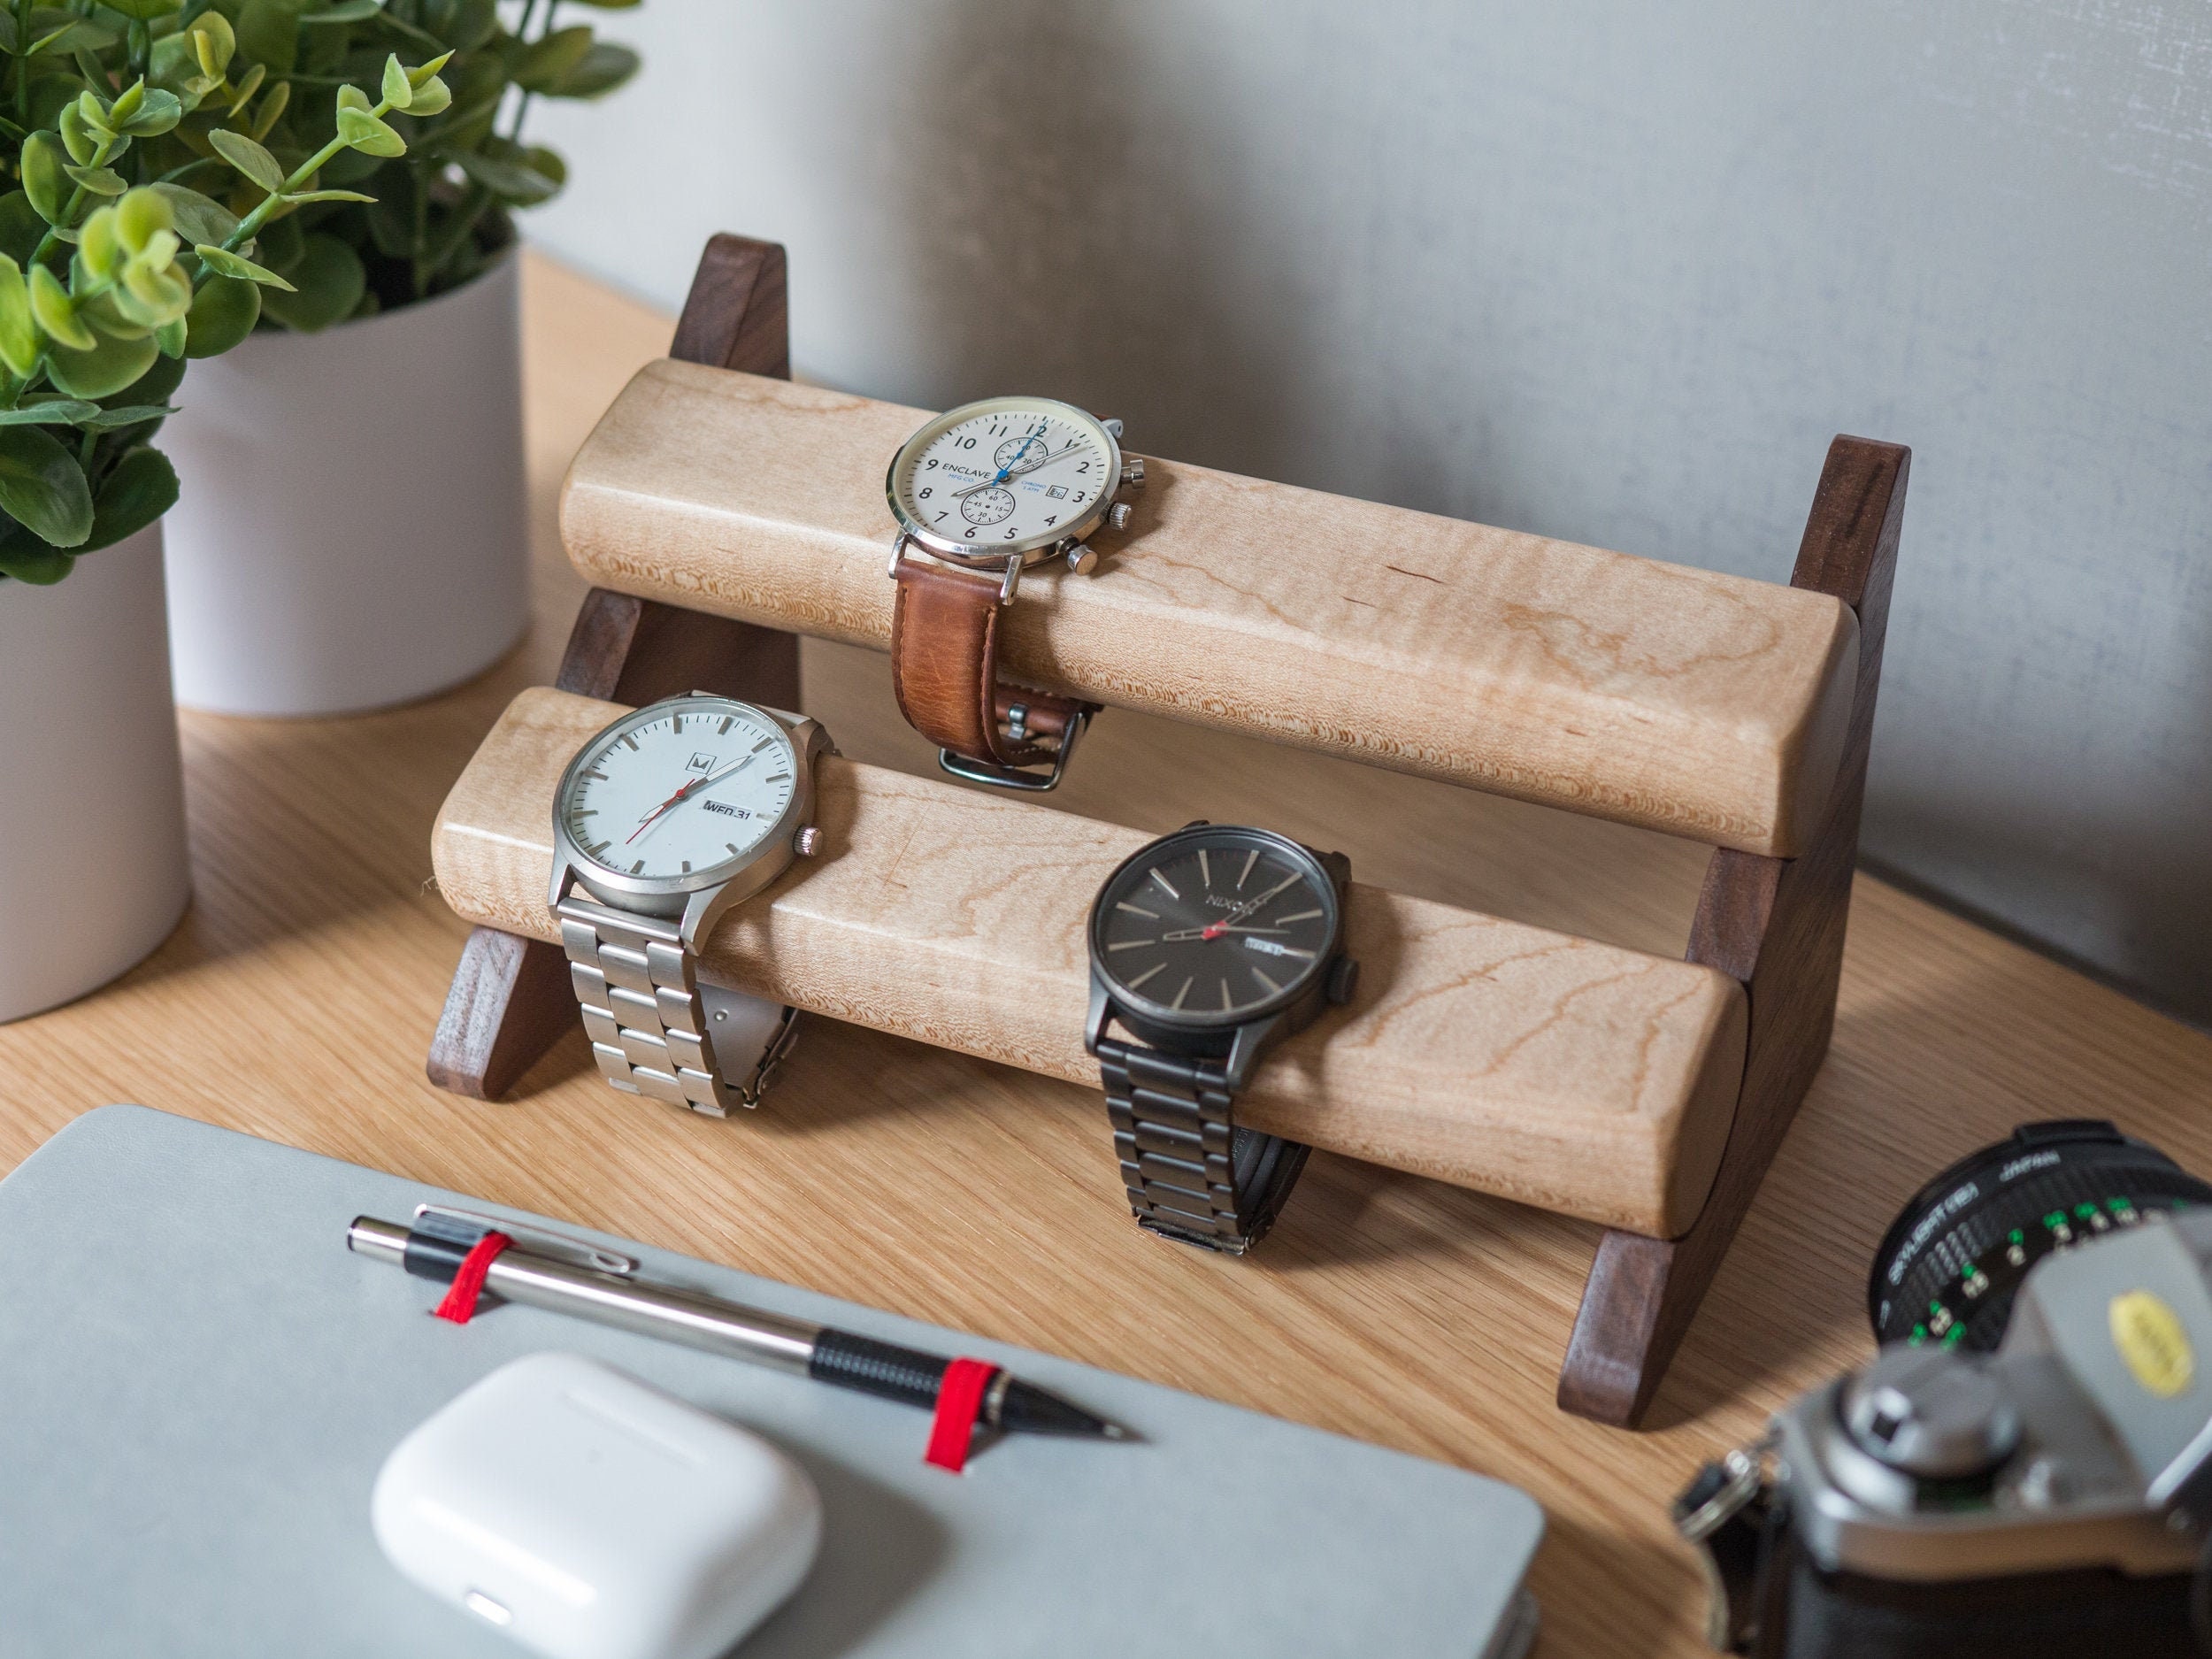 Riun Ex Blue Leather Watch Storage Box - Dual Watch Holder and Organizer -  Great Travel Case Display for Your Luxury Watches. - Zen Merchandiser